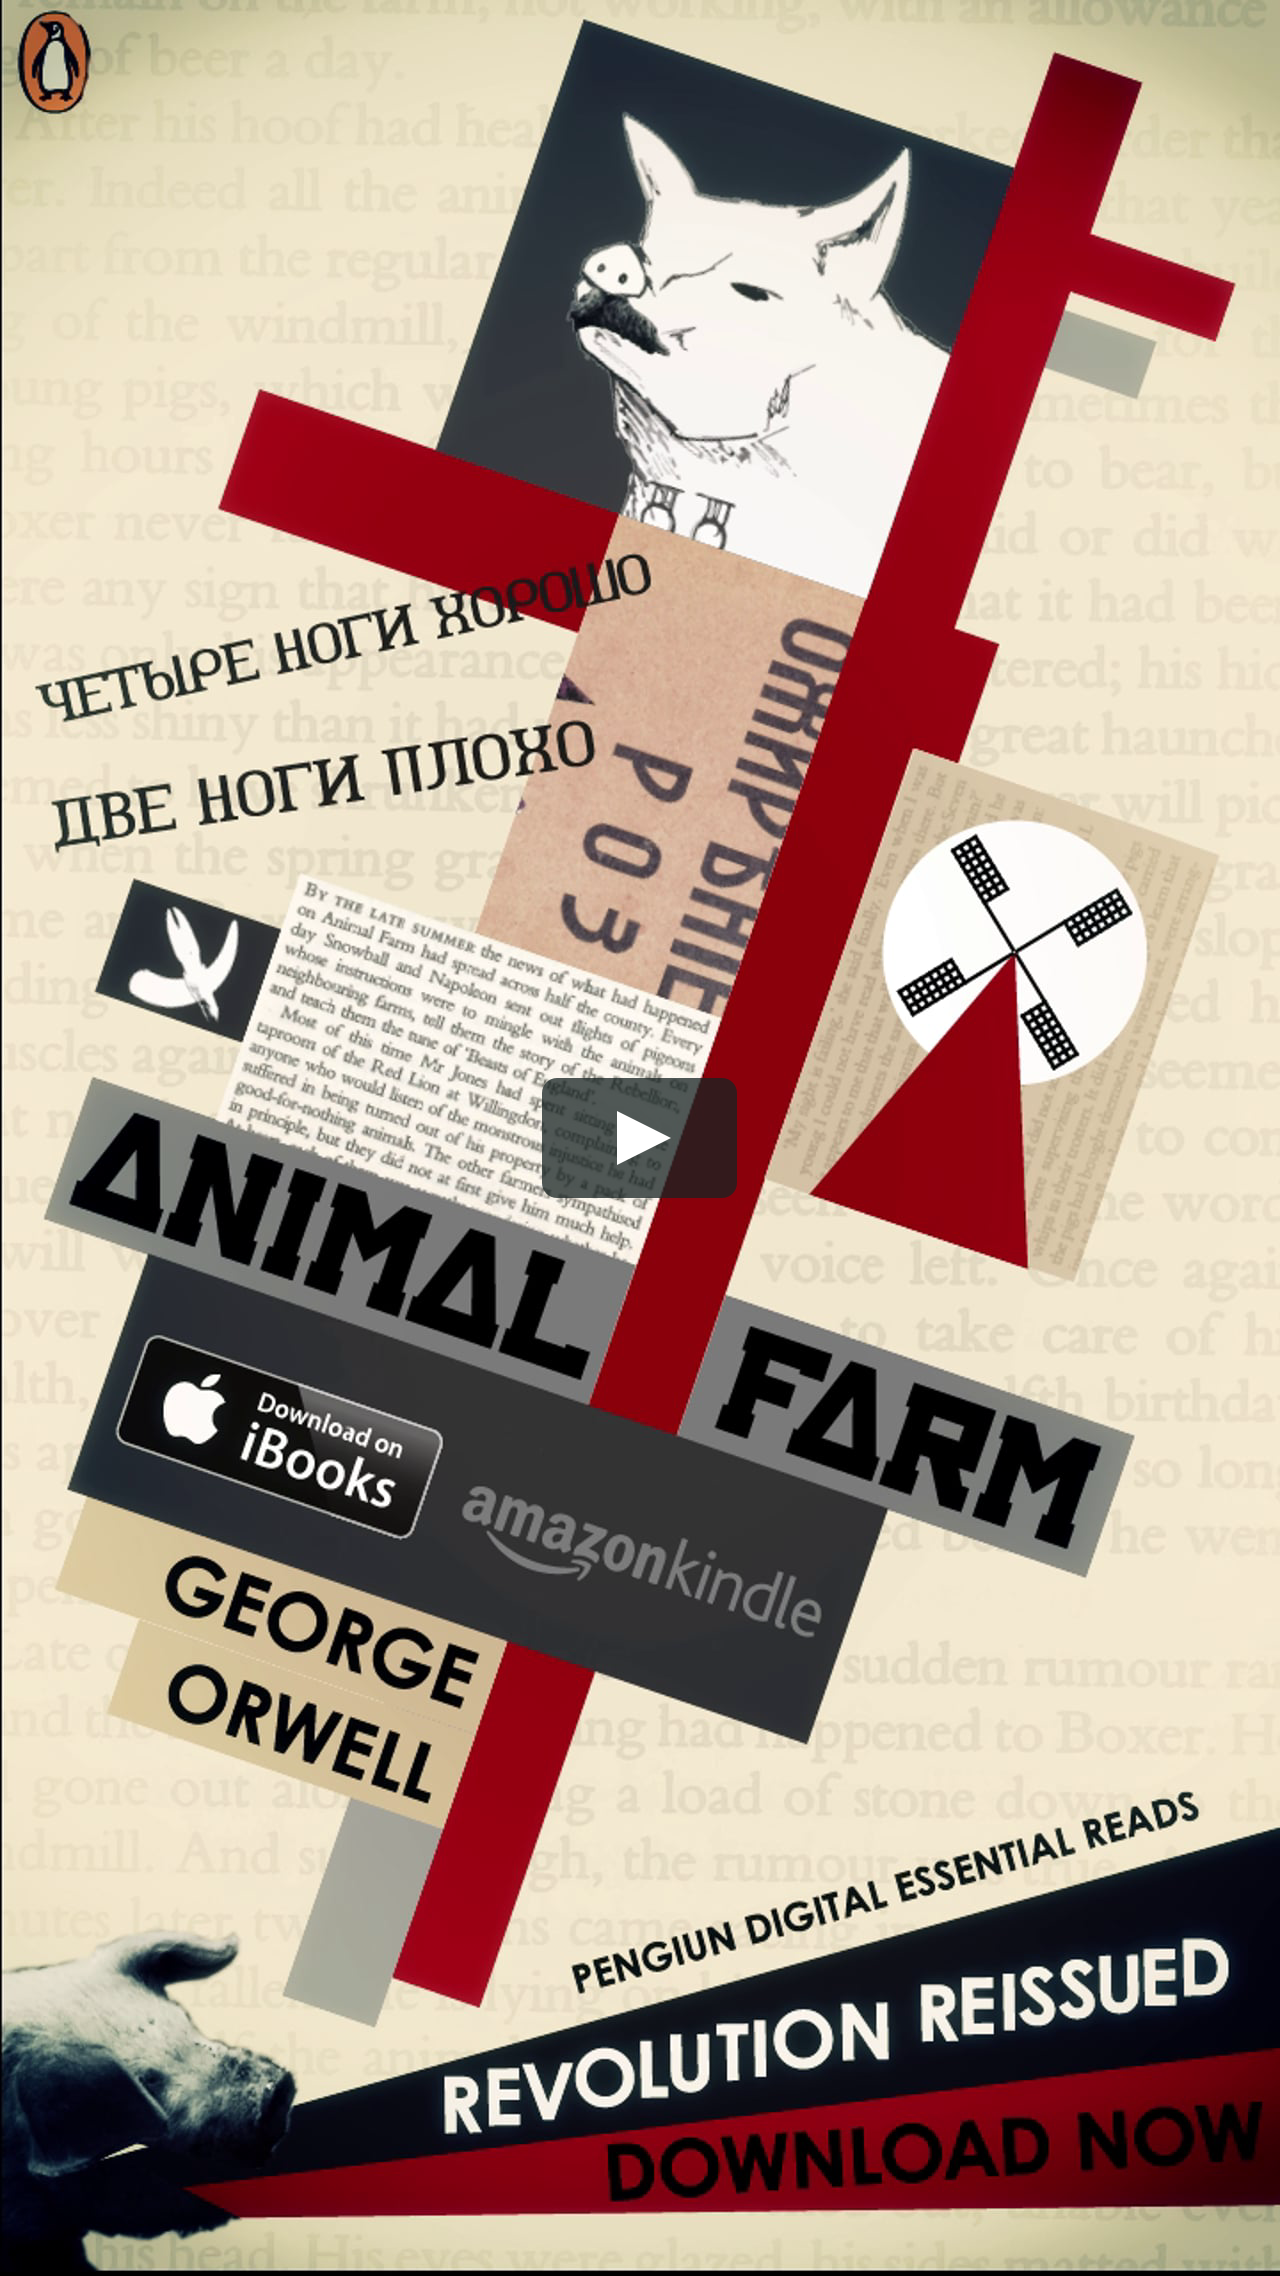 animal farm ibooks download